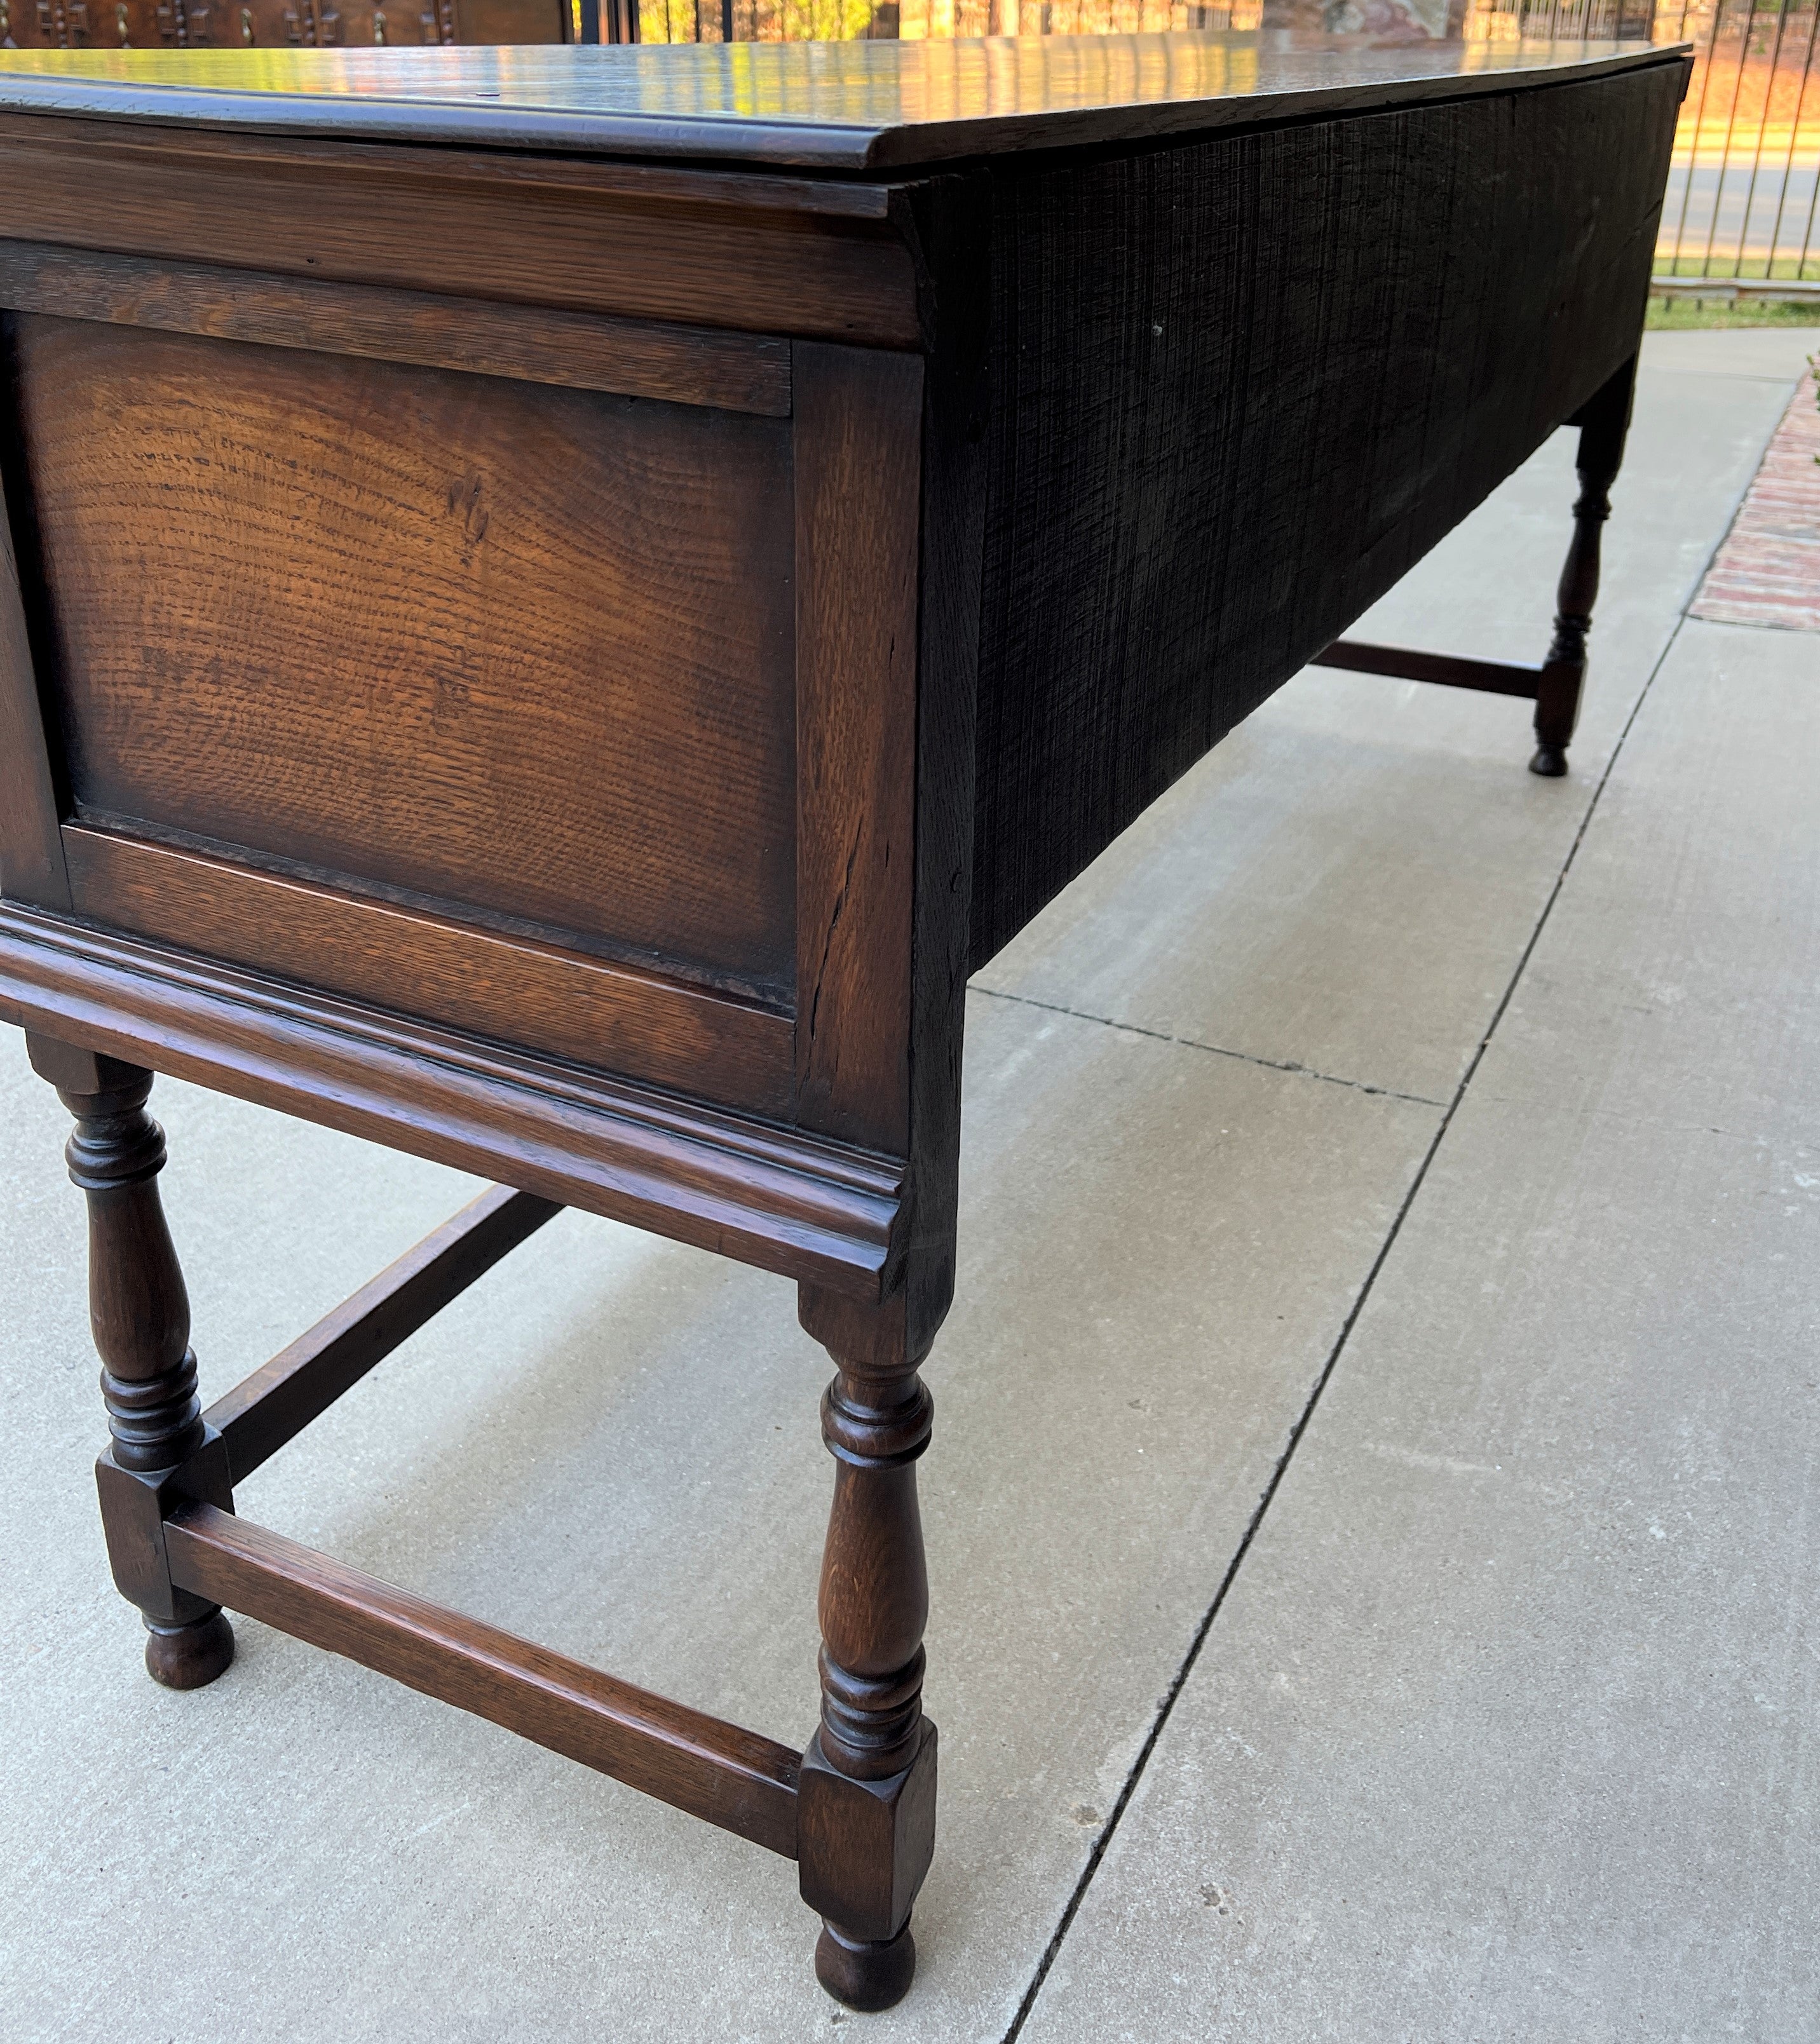 Antique English Sideboard Server Sofa Table Console Buffet Jacobean Oak c. 1890